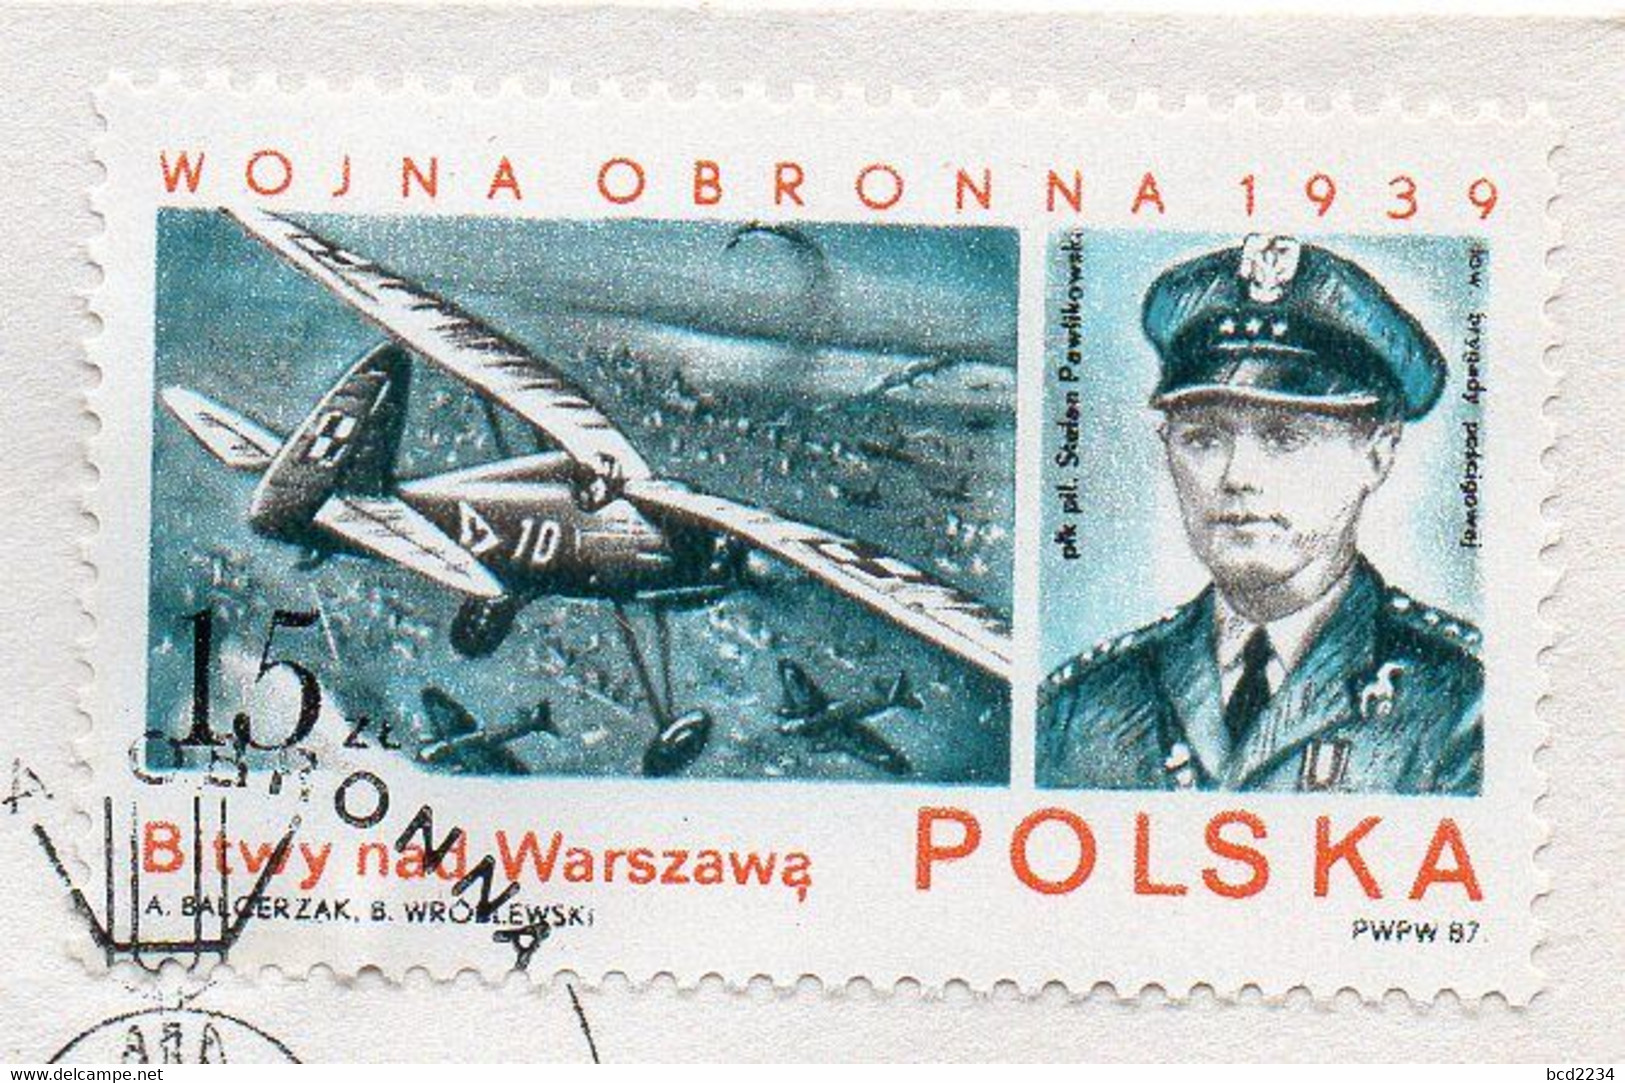 POLAND FDC 1987 ERROR DAMAGED LETTER I # 2967 B1 ANNIVERSARY POLISH DEFENCE AGAINST NAZI GERMANY INVASION WORLD WW2 - Errors & Oddities